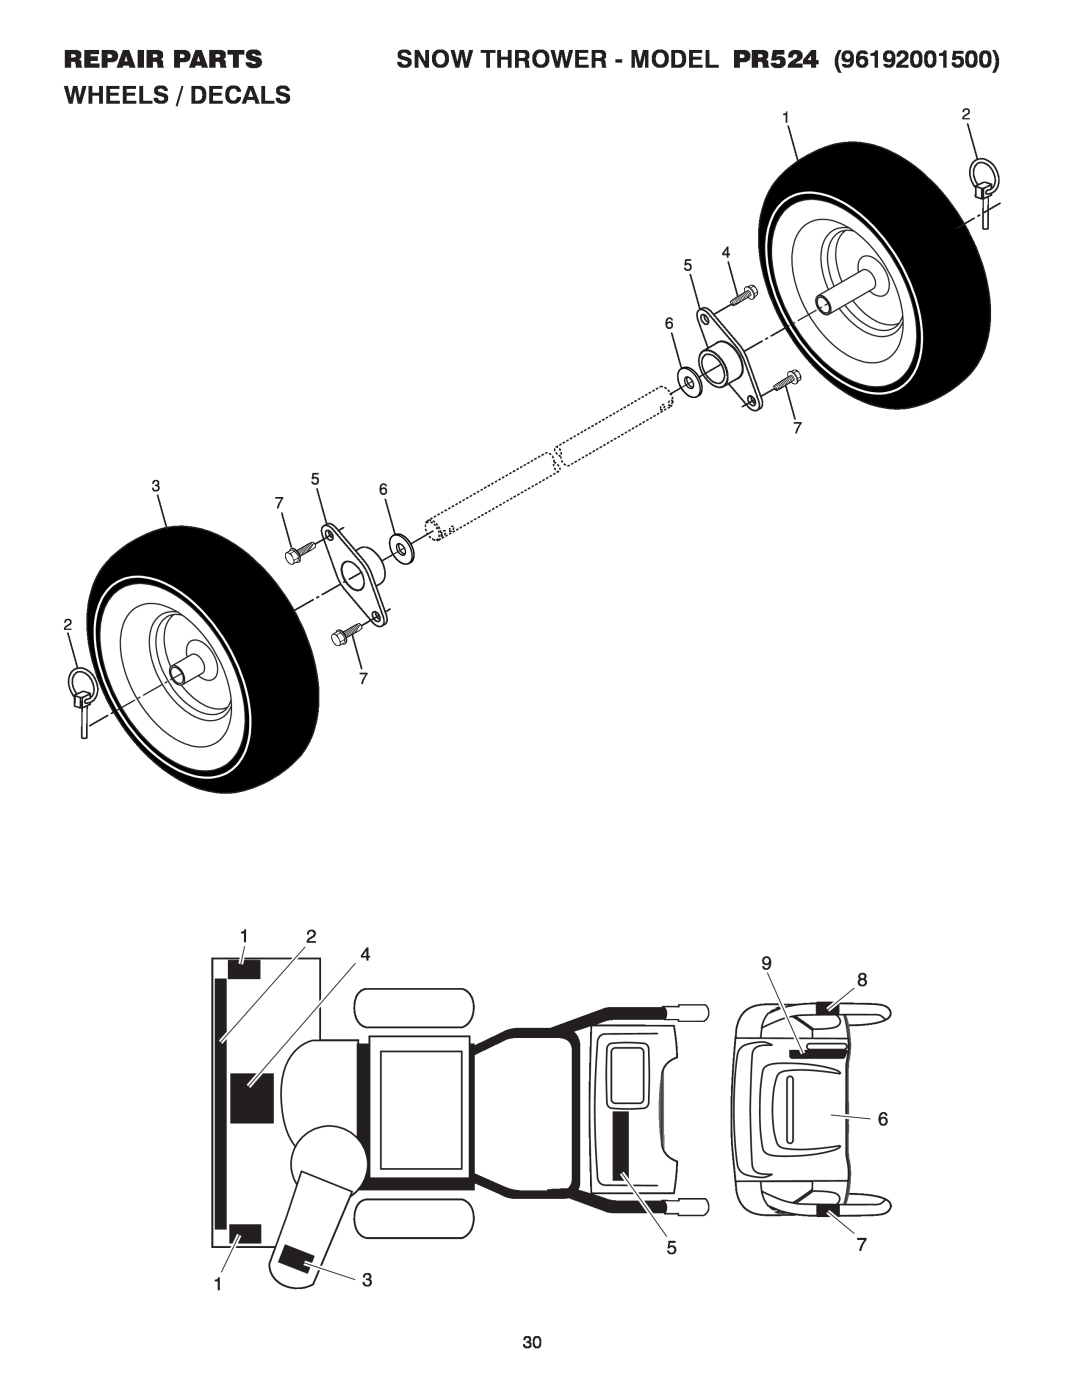 Poulan 414639 owner manual Wheels / Decals, Repair Parts, SNOW THROWER - MODEL PR524 